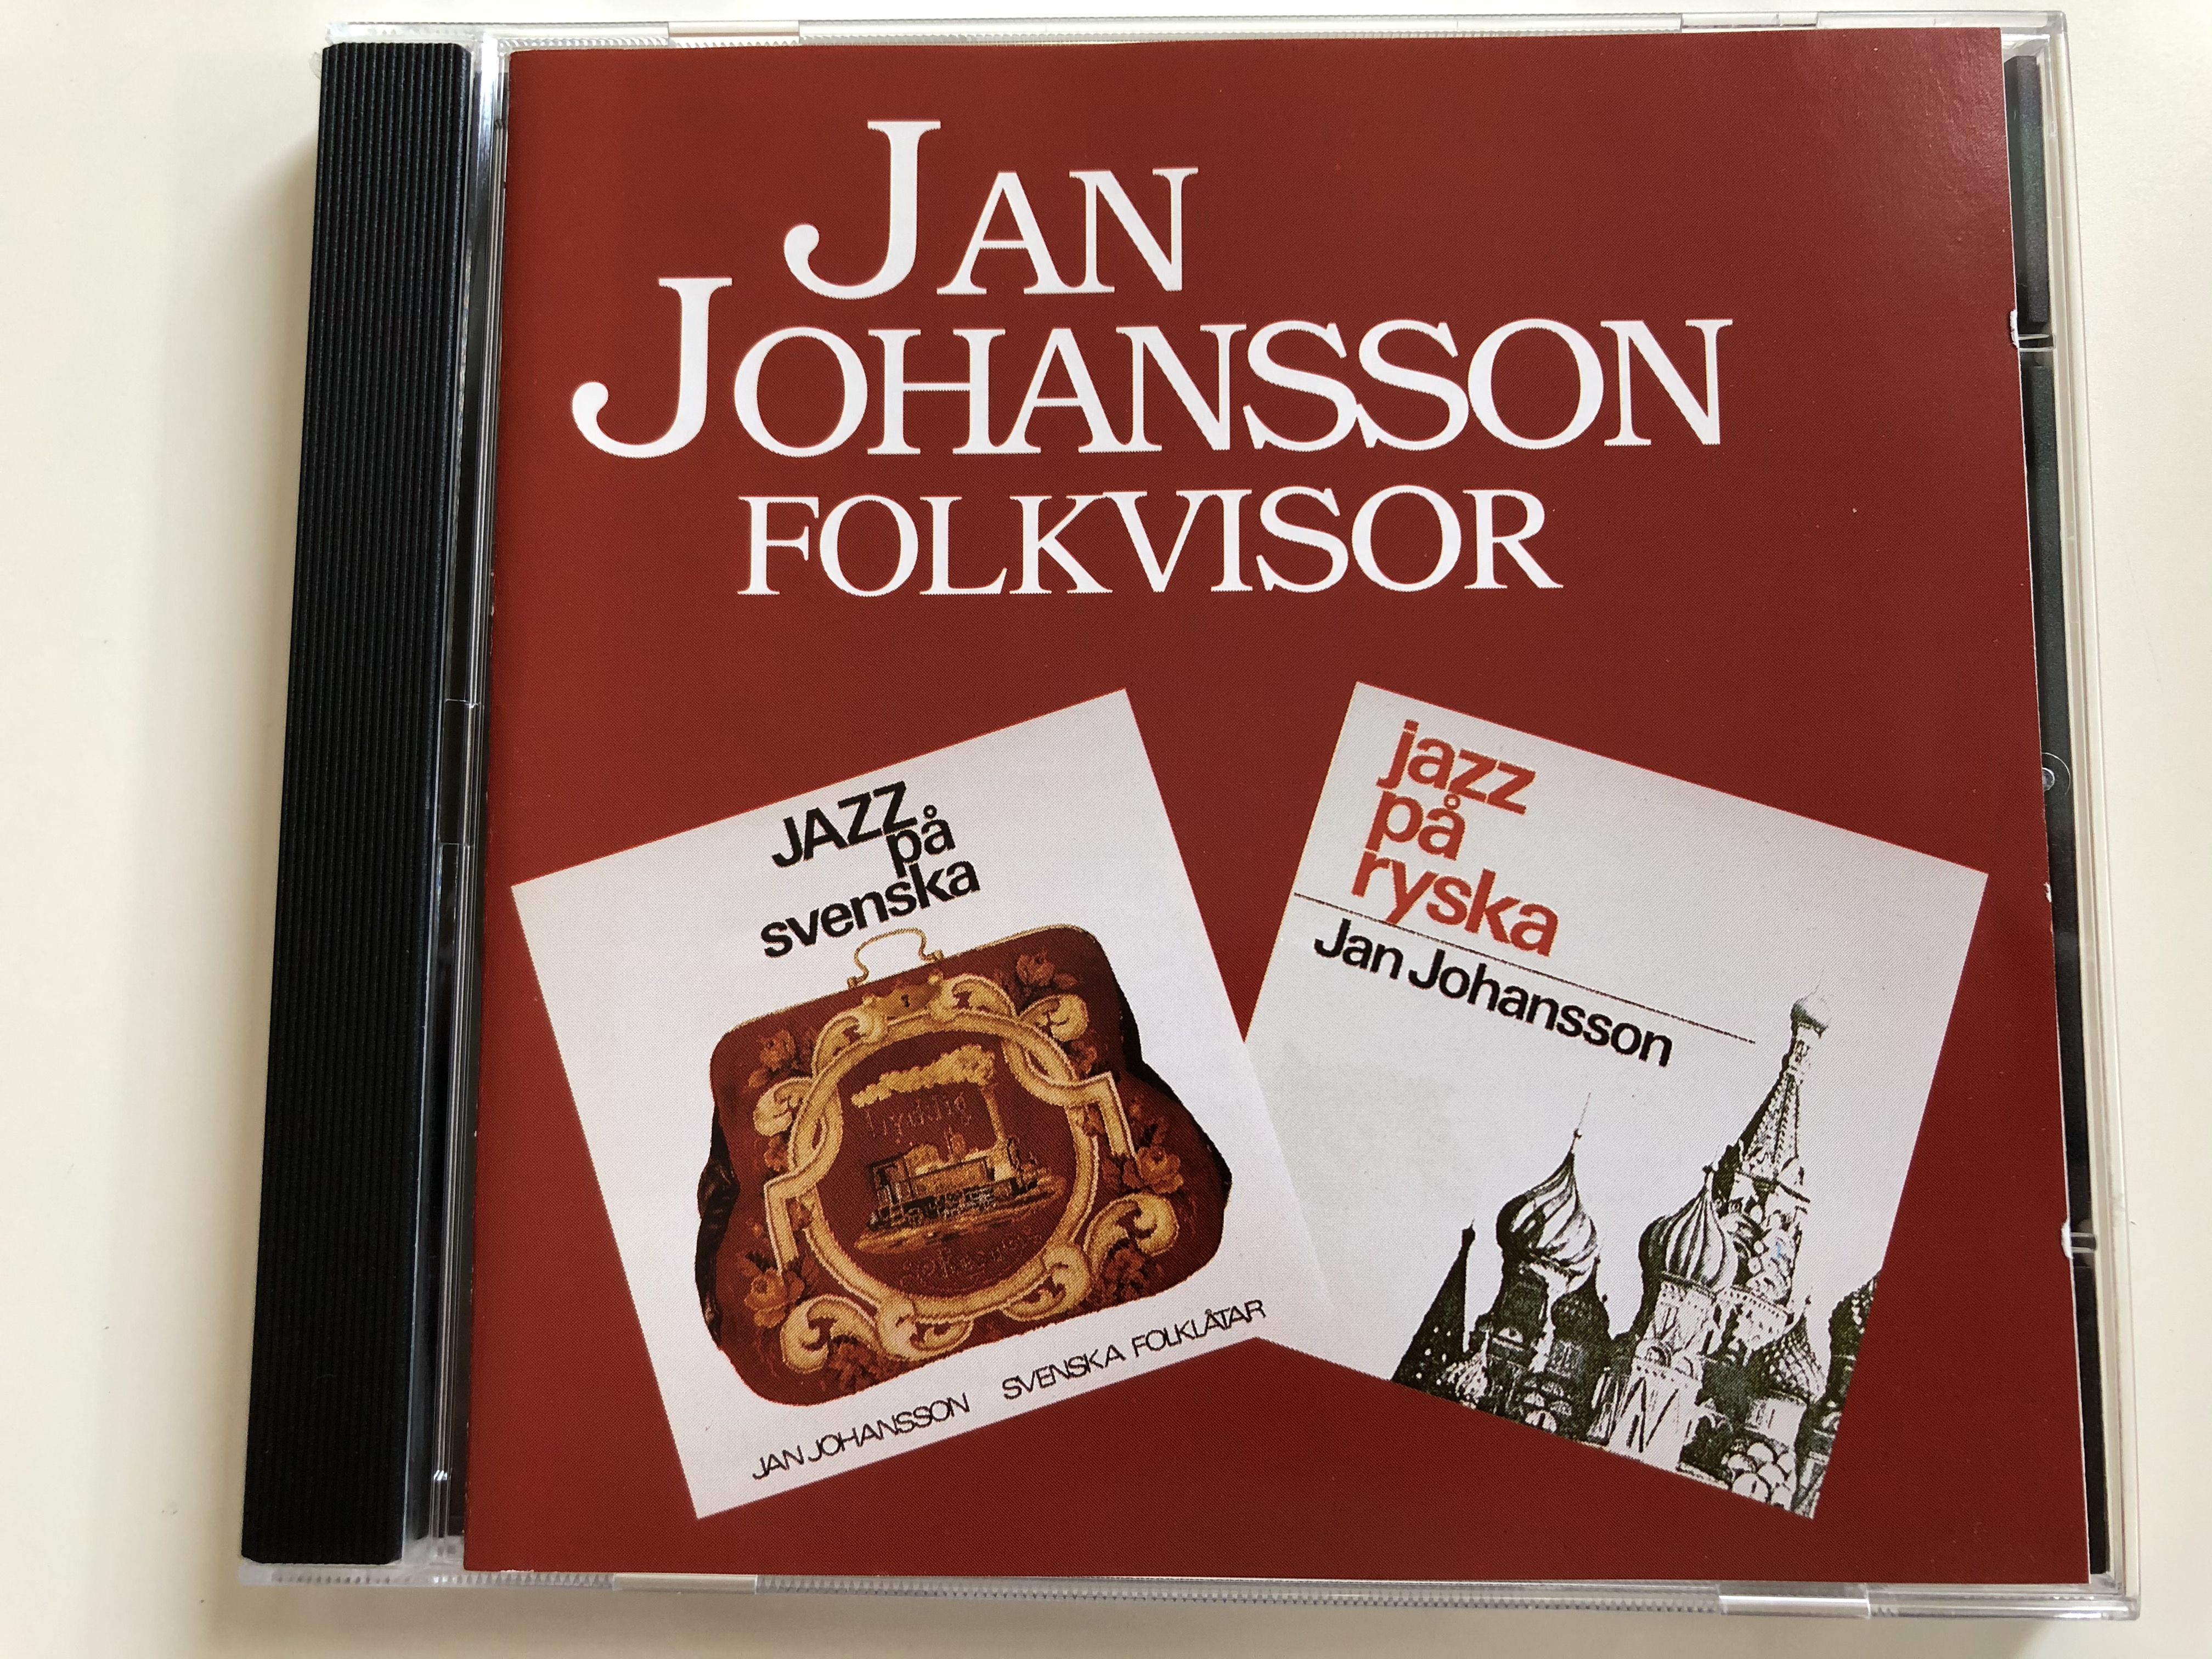 jan-johansson-folkvisor-jazz-pa-svenska-jazz-pa-ryska-heptagon-records-audio-cd-1995-stereo-hecd-000-1-.jpg